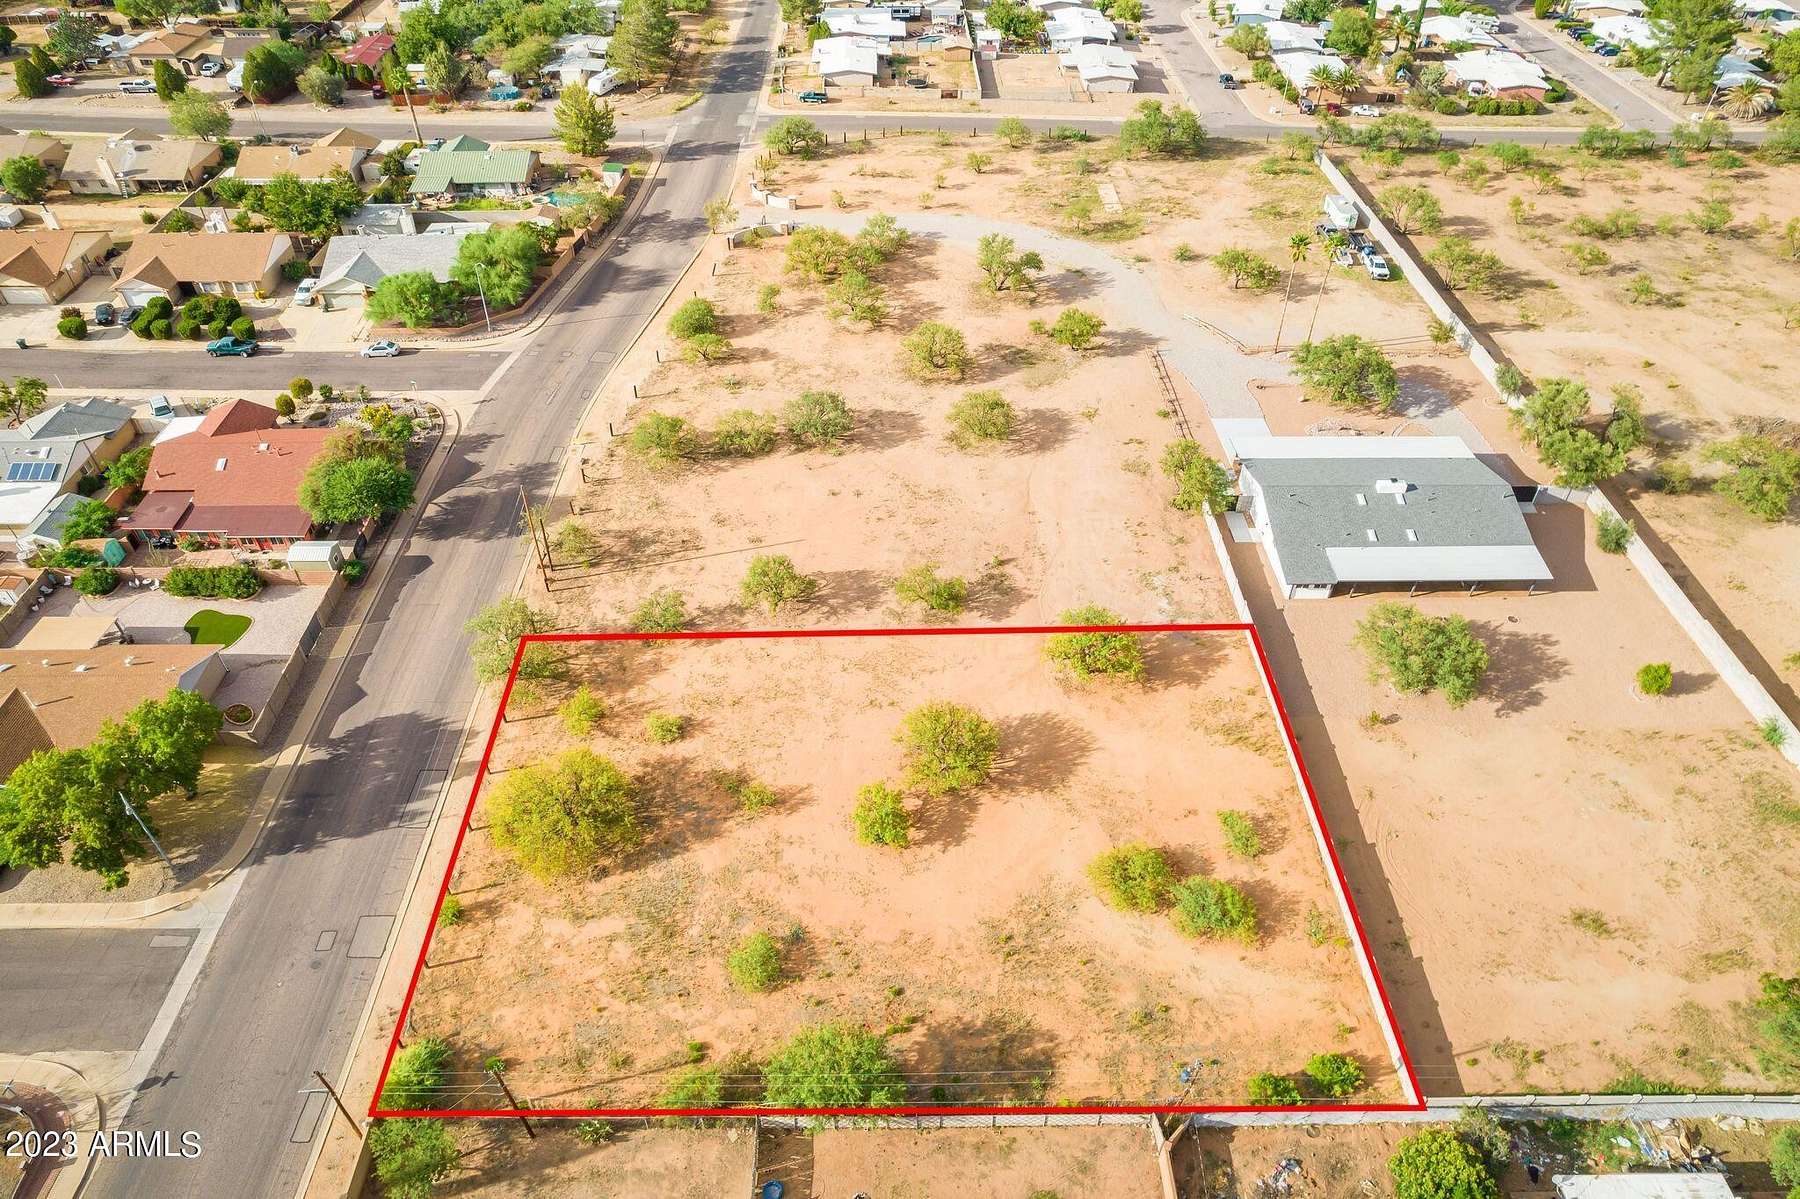 0.7 Acres of Residential Land for Sale in Sierra Vista, Arizona